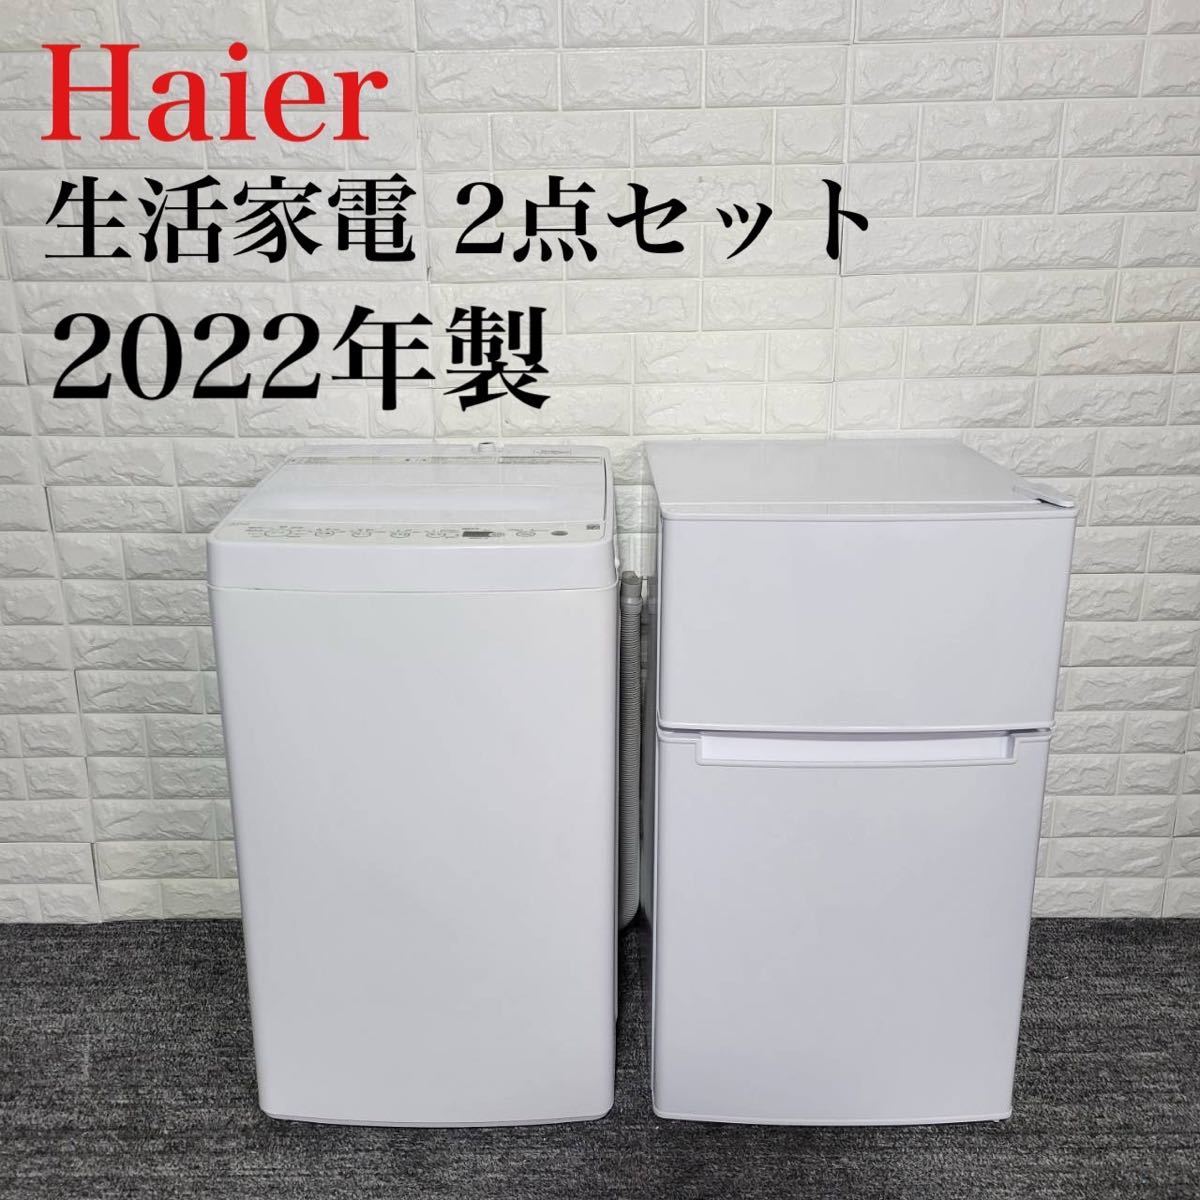 Haier 生活家電 2点セット 冷蔵庫 洗濯機 2022年製 家電 A0093